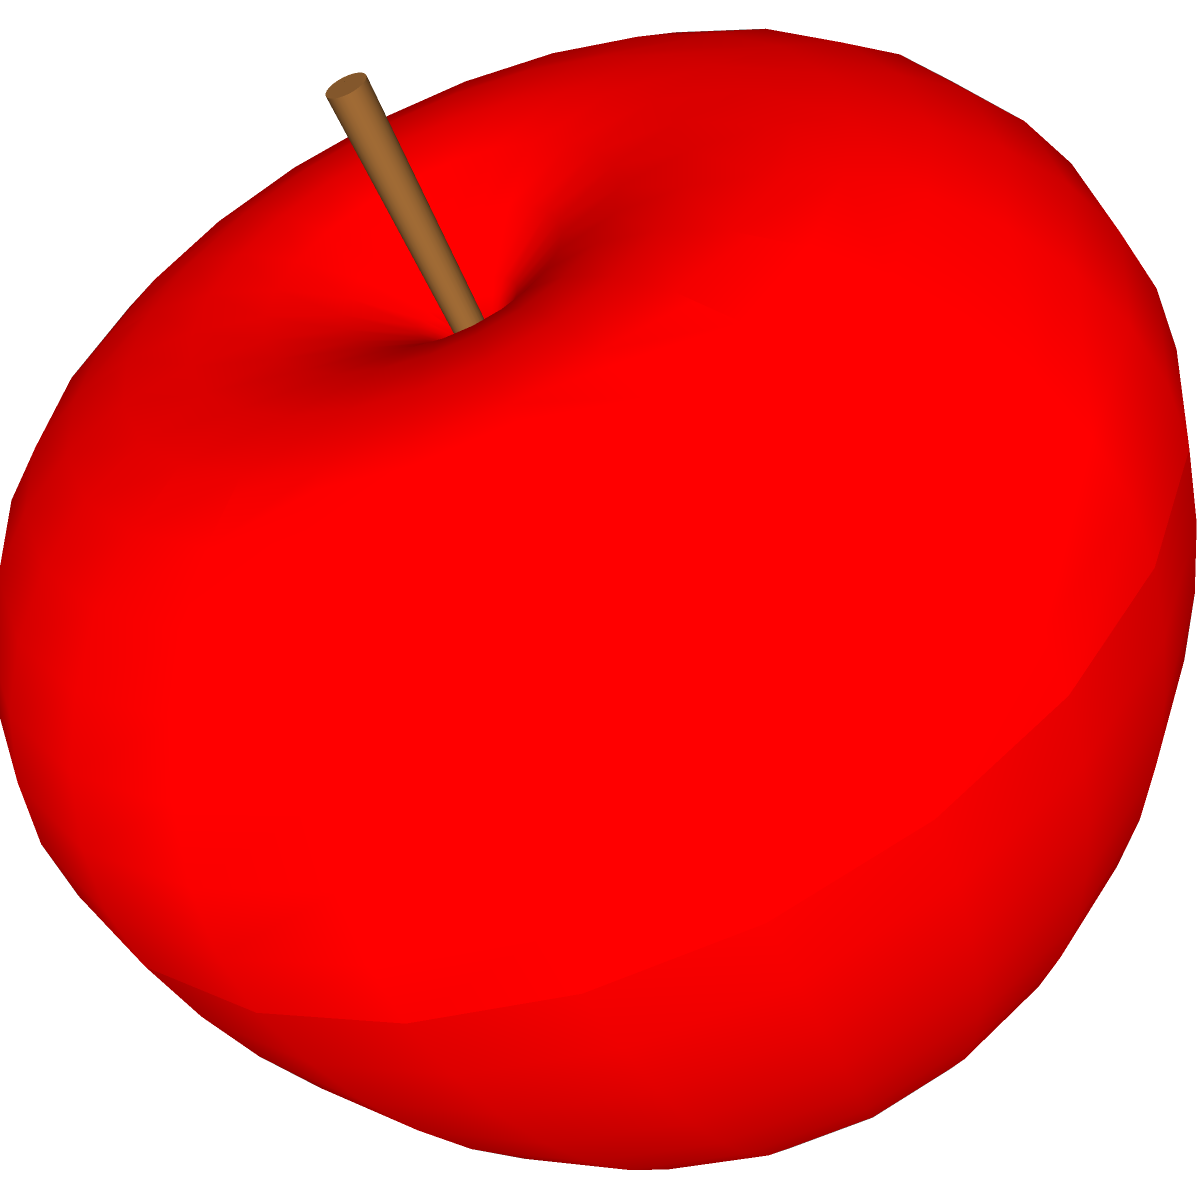 Red Apple Clip Art - ClipArt Best